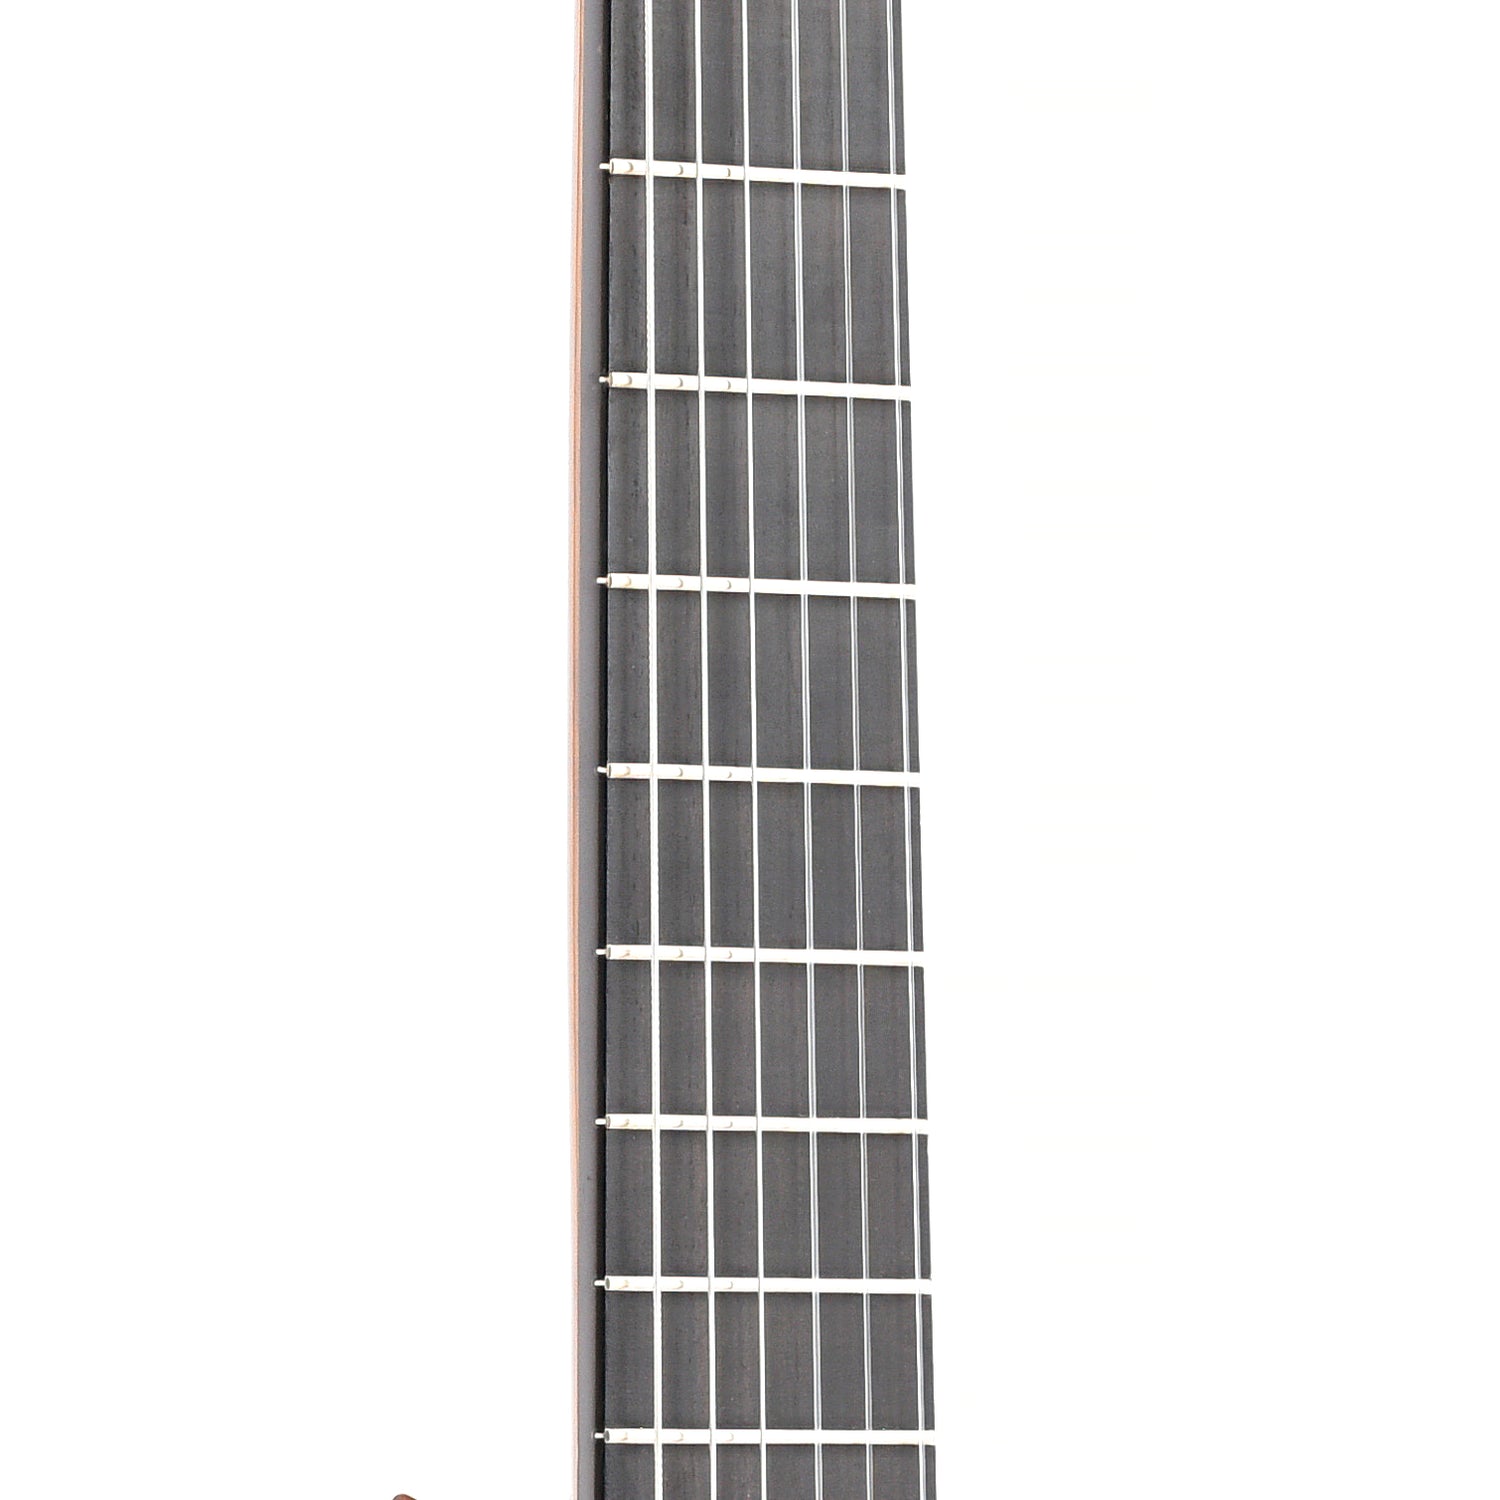 Image 8 of Manuel Contreras 1a (1984) - SKU# 28U-206309 : Product Type Classical & Flamenco Guitars : Elderly Instruments